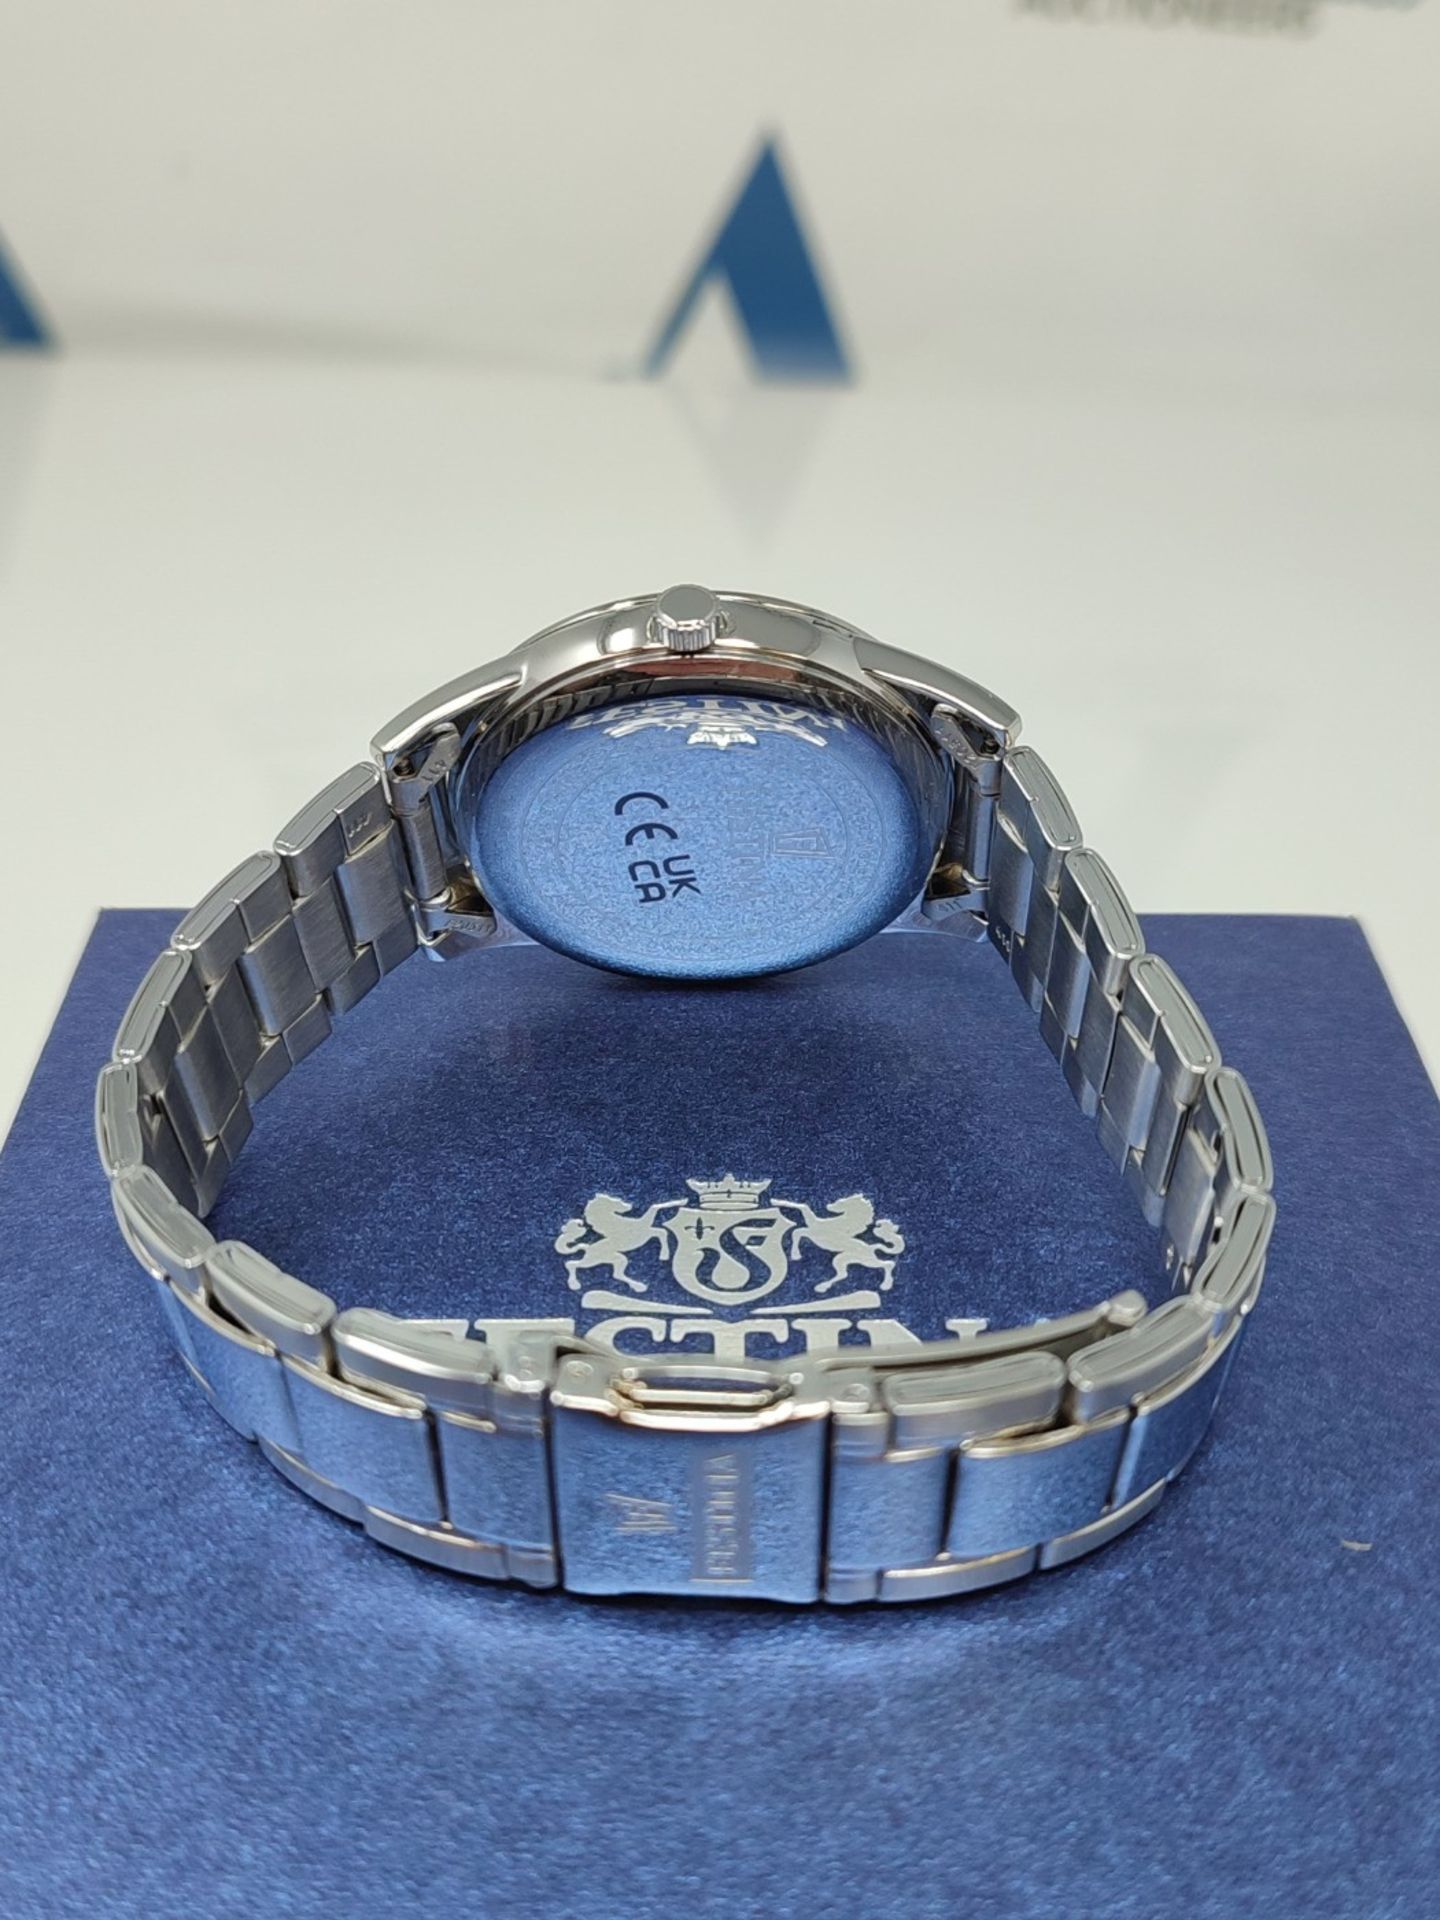 RRP £71.00 Festina Men's Analog-Digital Quartz Watch with Stainless Steel Bracelet - Image 6 of 6